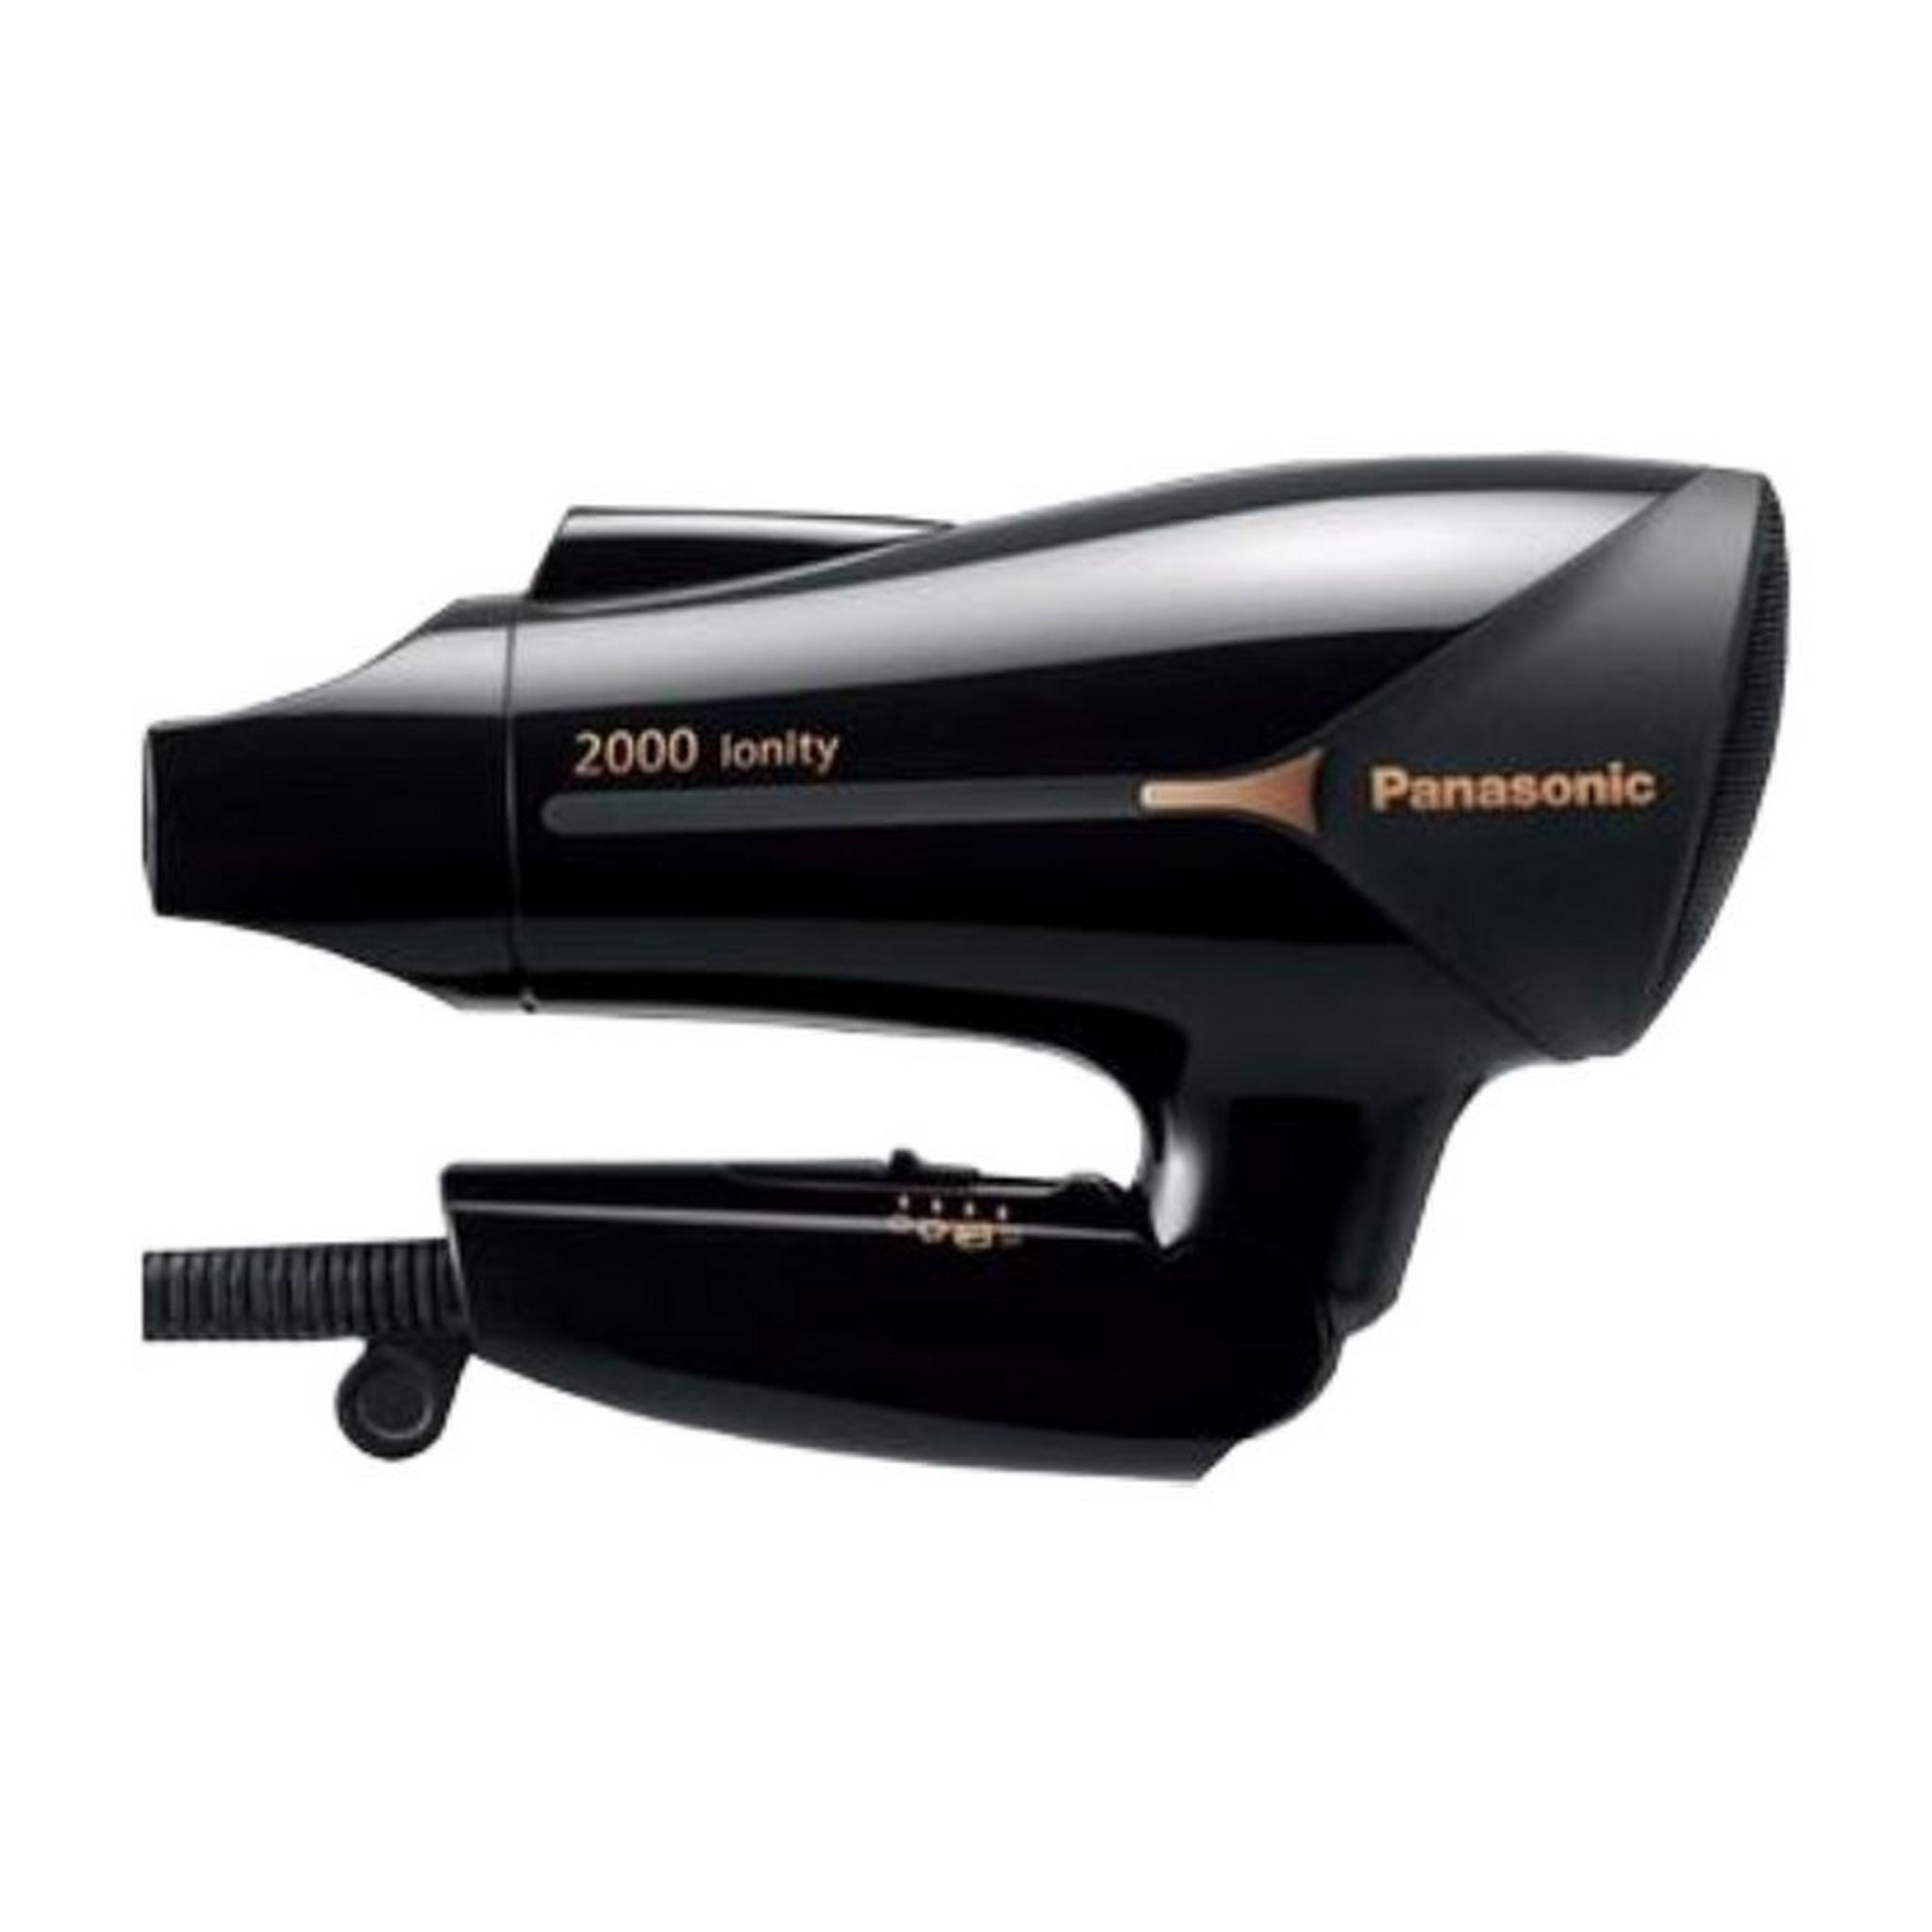 Panasonic Ionity 2000W Hair Dryer - Black (EH-NE65-K685)